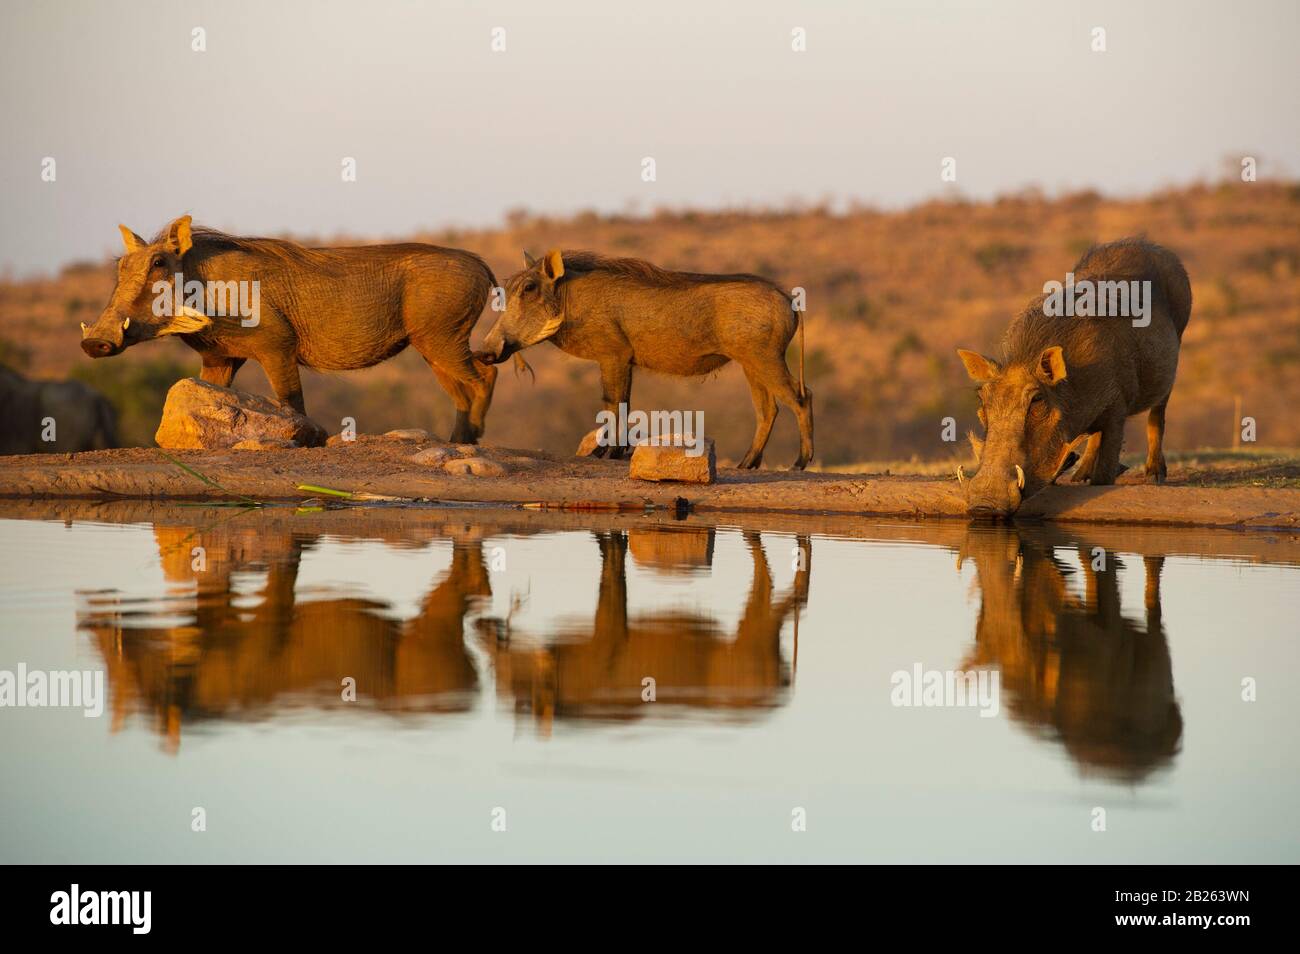 Warthog, Phacochoerus africanus, Welgevonden Game Reserve, South Africa Stock Photo